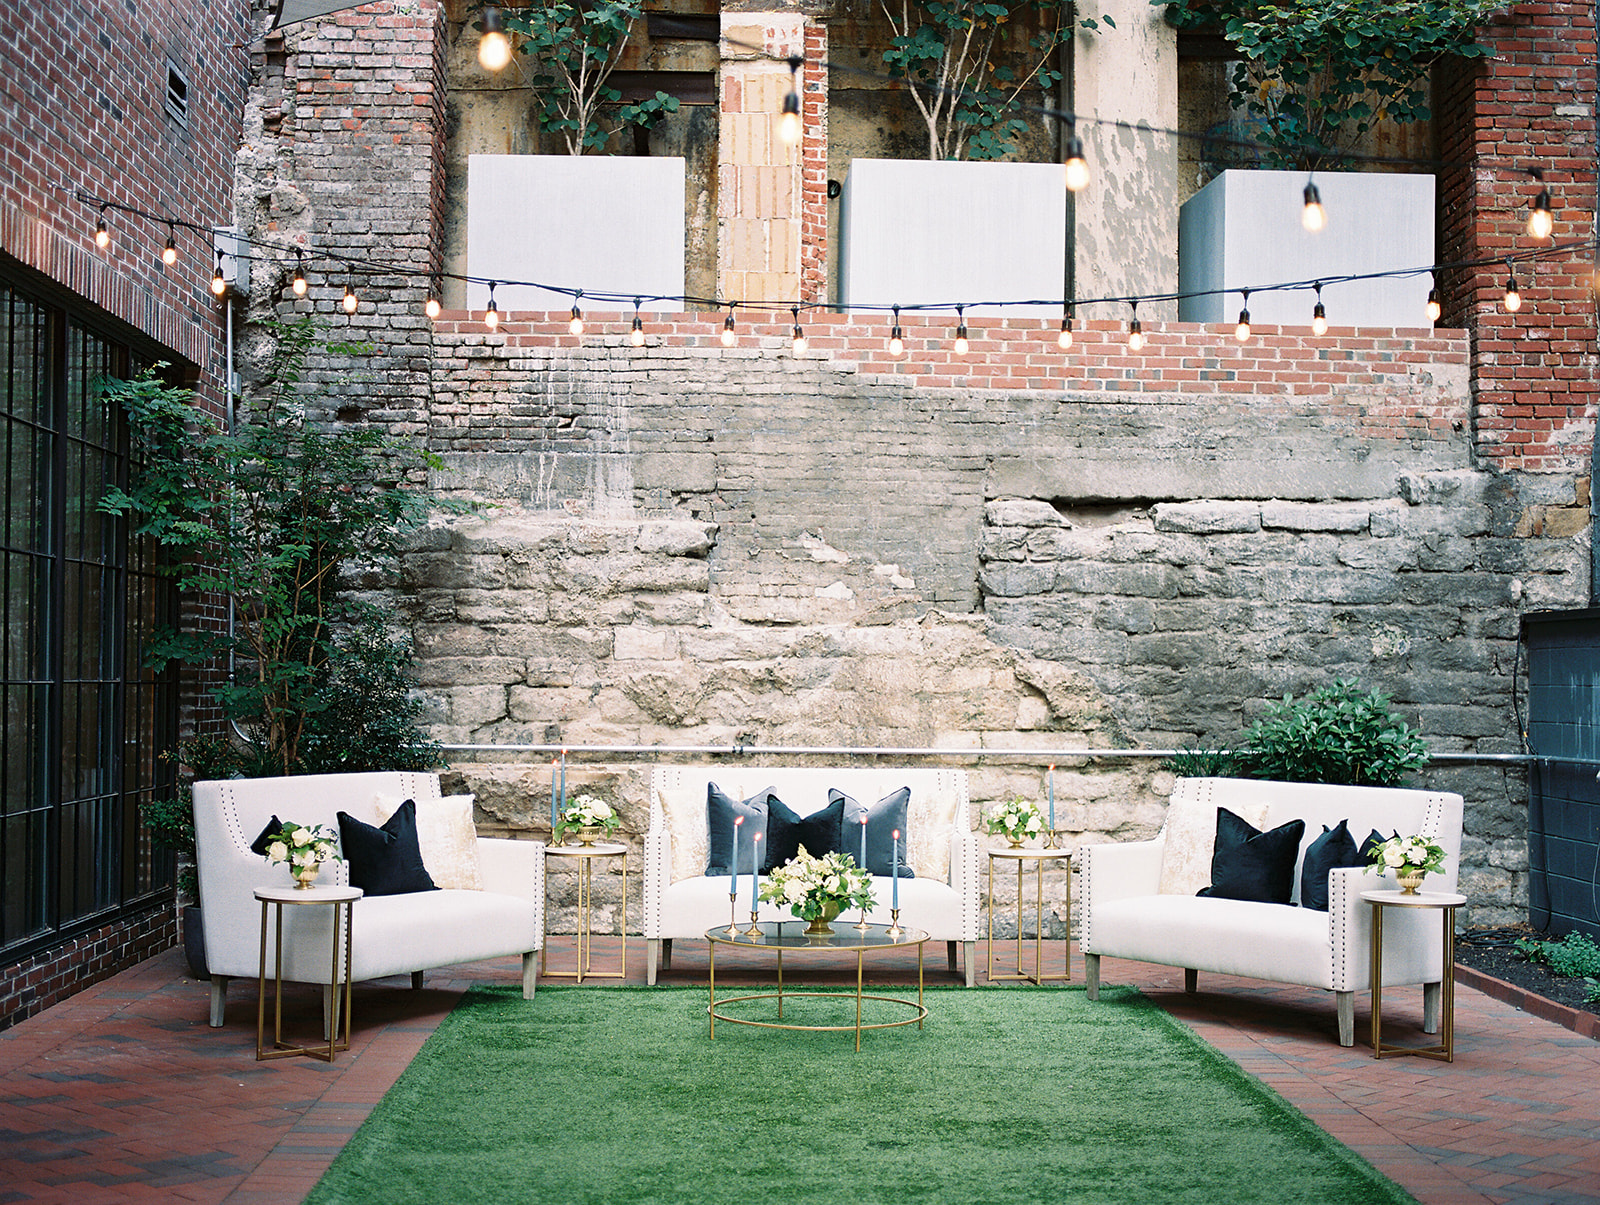 chic lounge setup in outdoor courtyard for Secret Urban Garden Wedding at Philadelphia’s Fitler Club